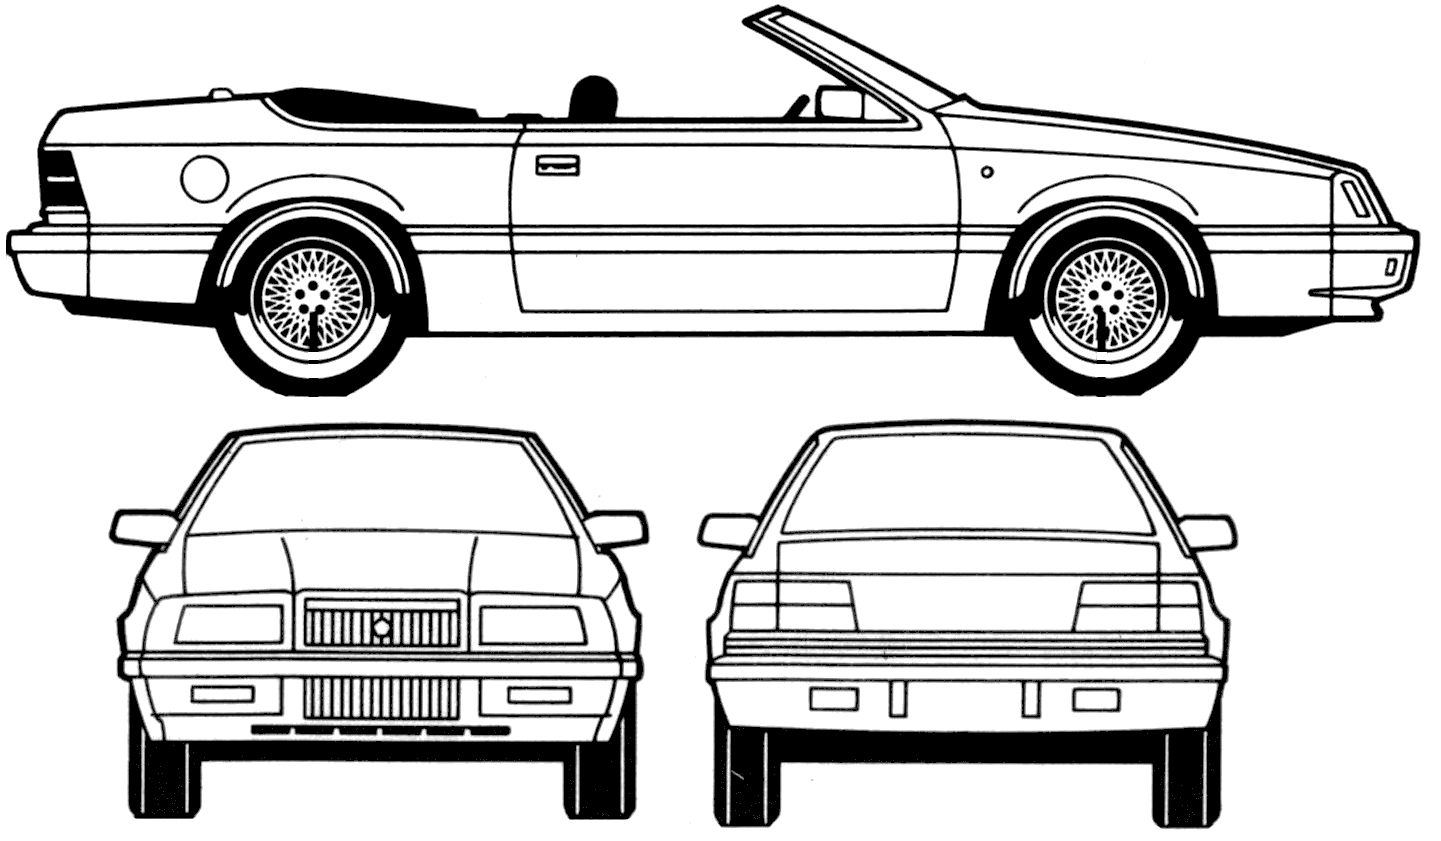 1990 Chrysler lebaron #2